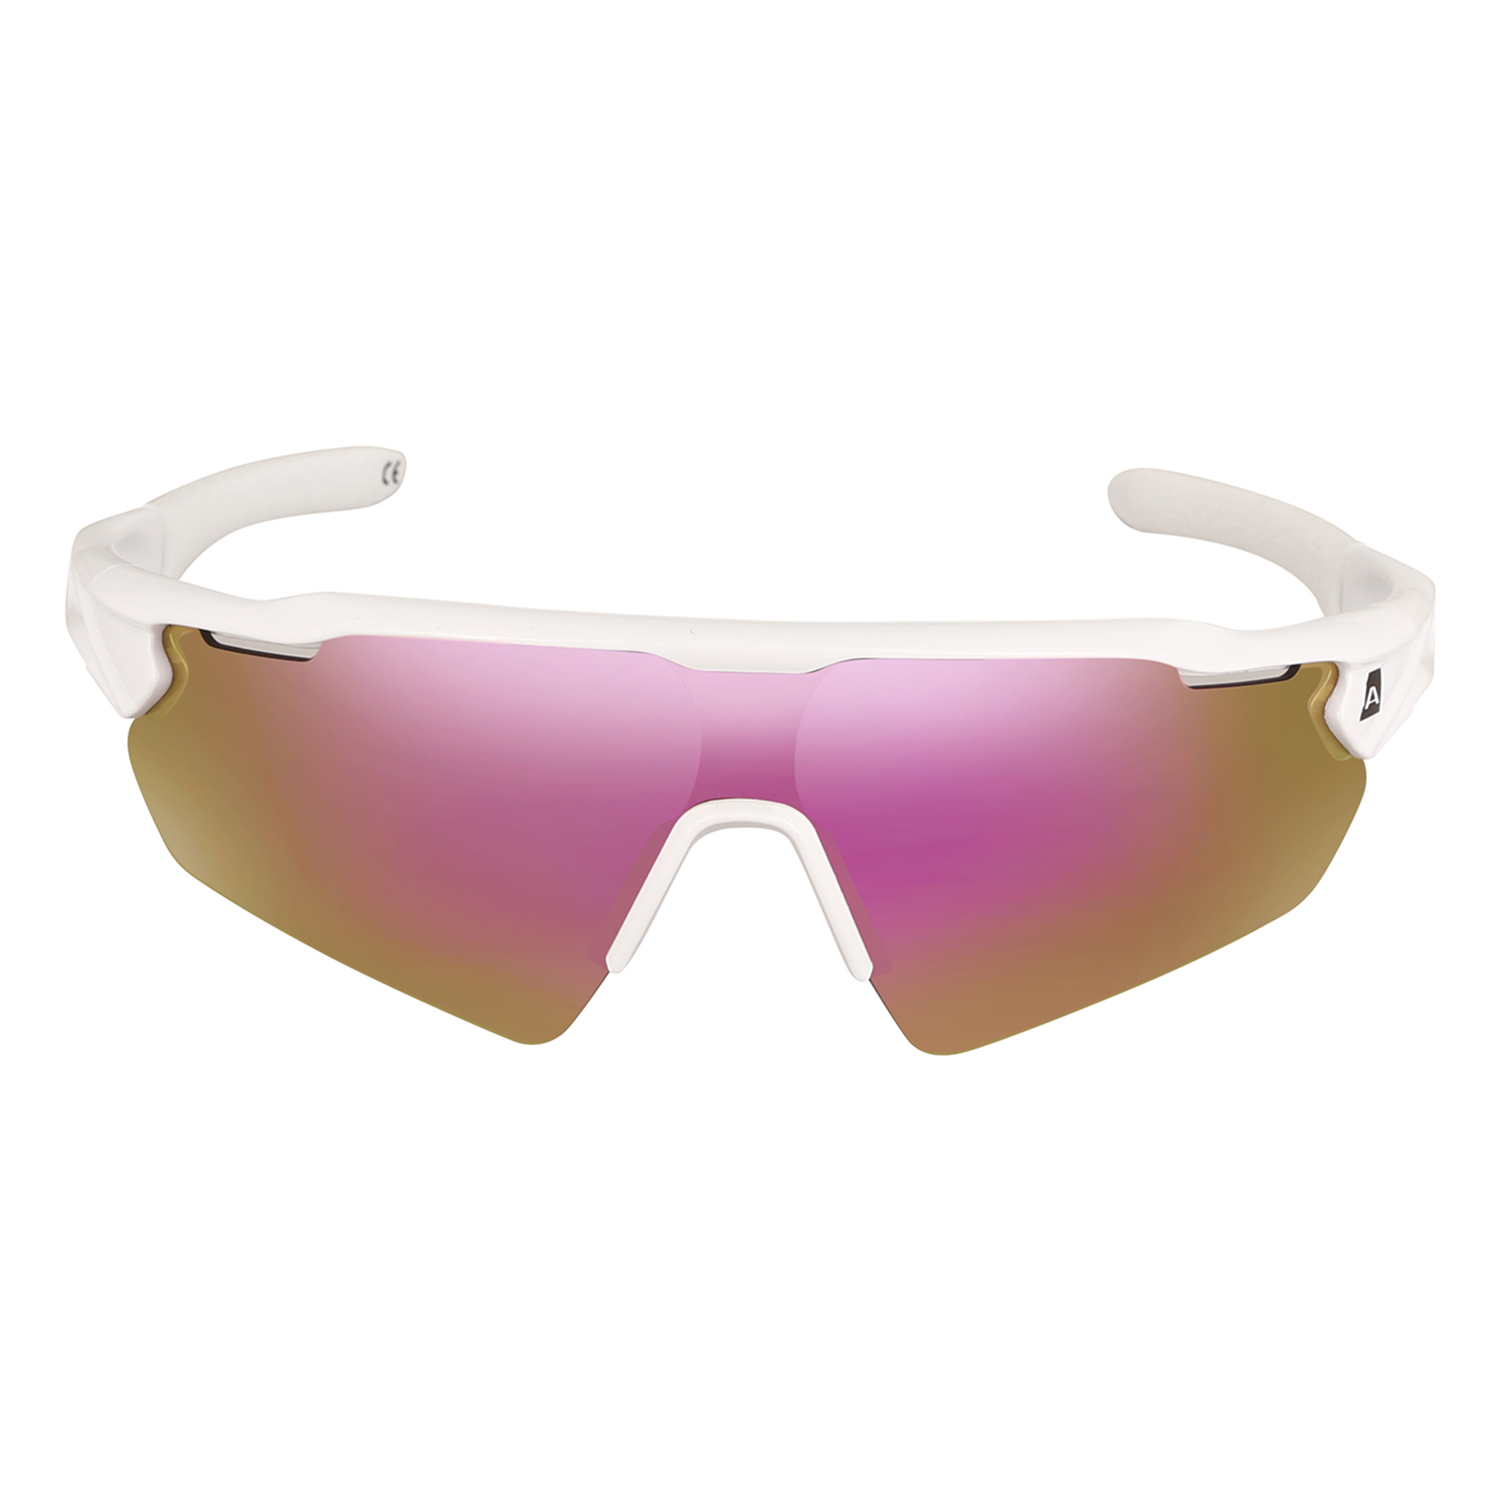 Sunglasses AP SPORTE pink glo